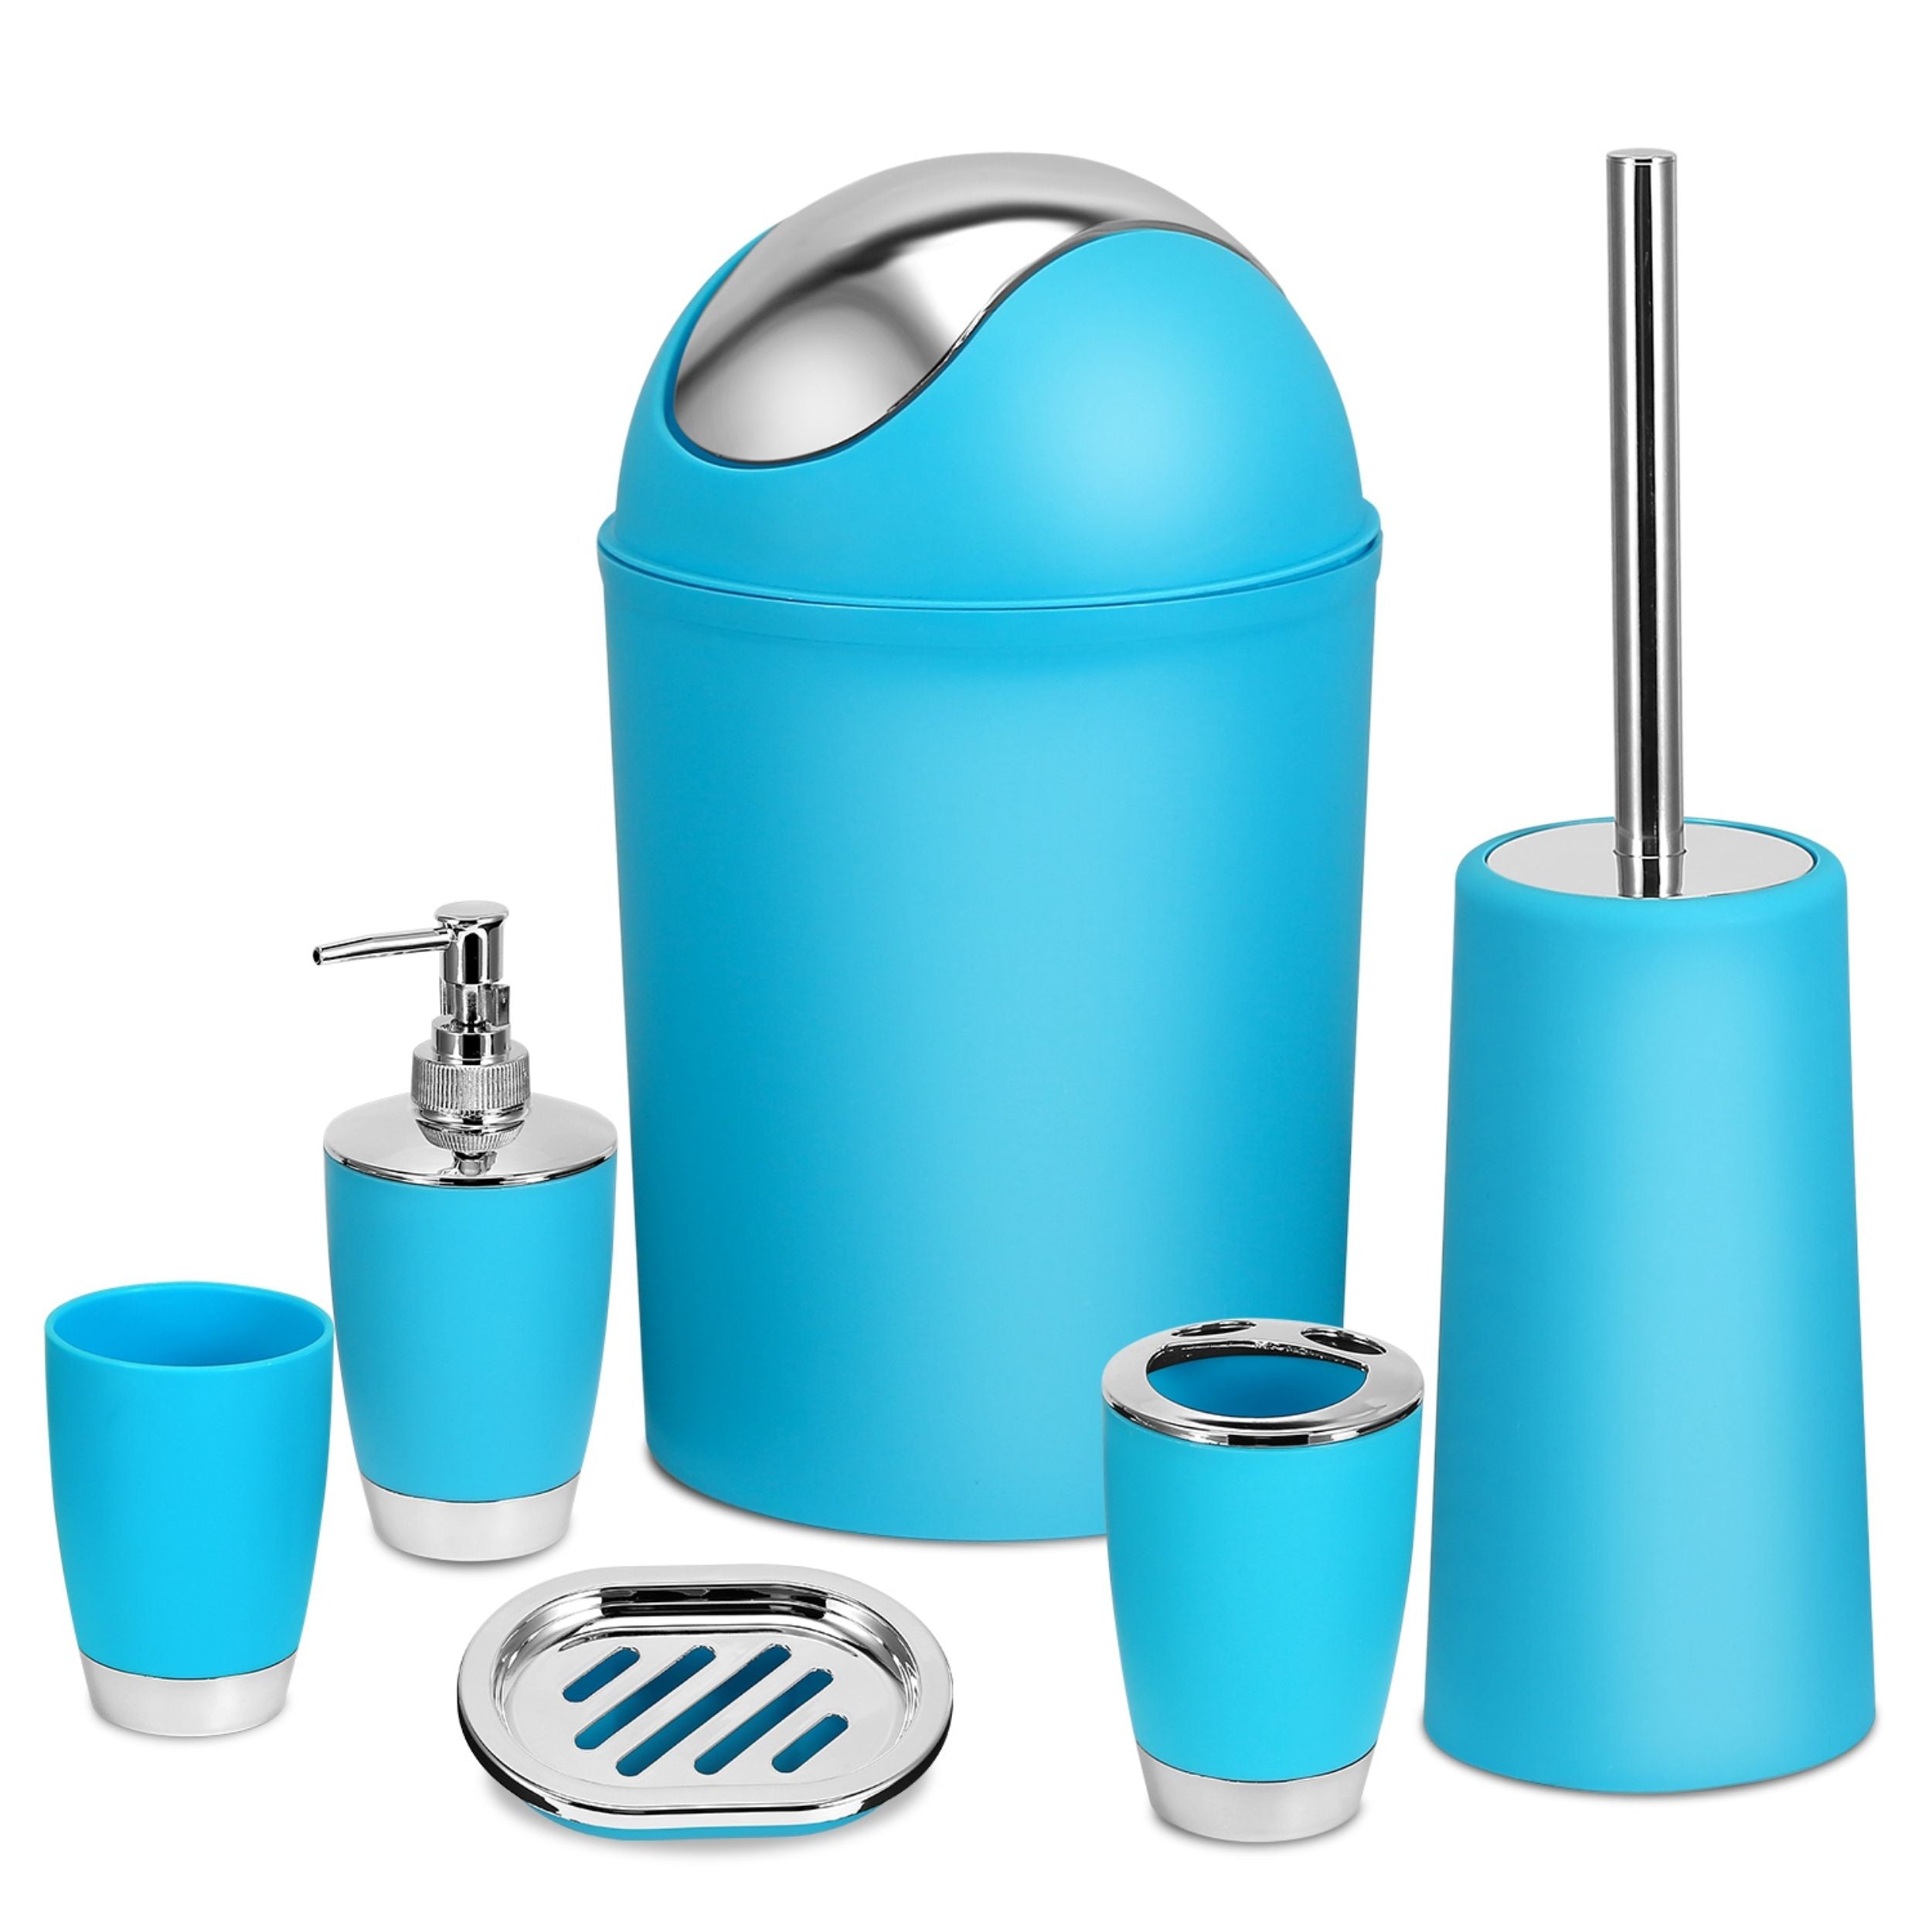 title:Bathroom Accessories Set 6 Pcs Bathroom Set Ensemble Complete Soap Dispenser Toothbrush Holder Tumbler Soap Dish Toilet Cleaning Brush Trash Can;color:Blue